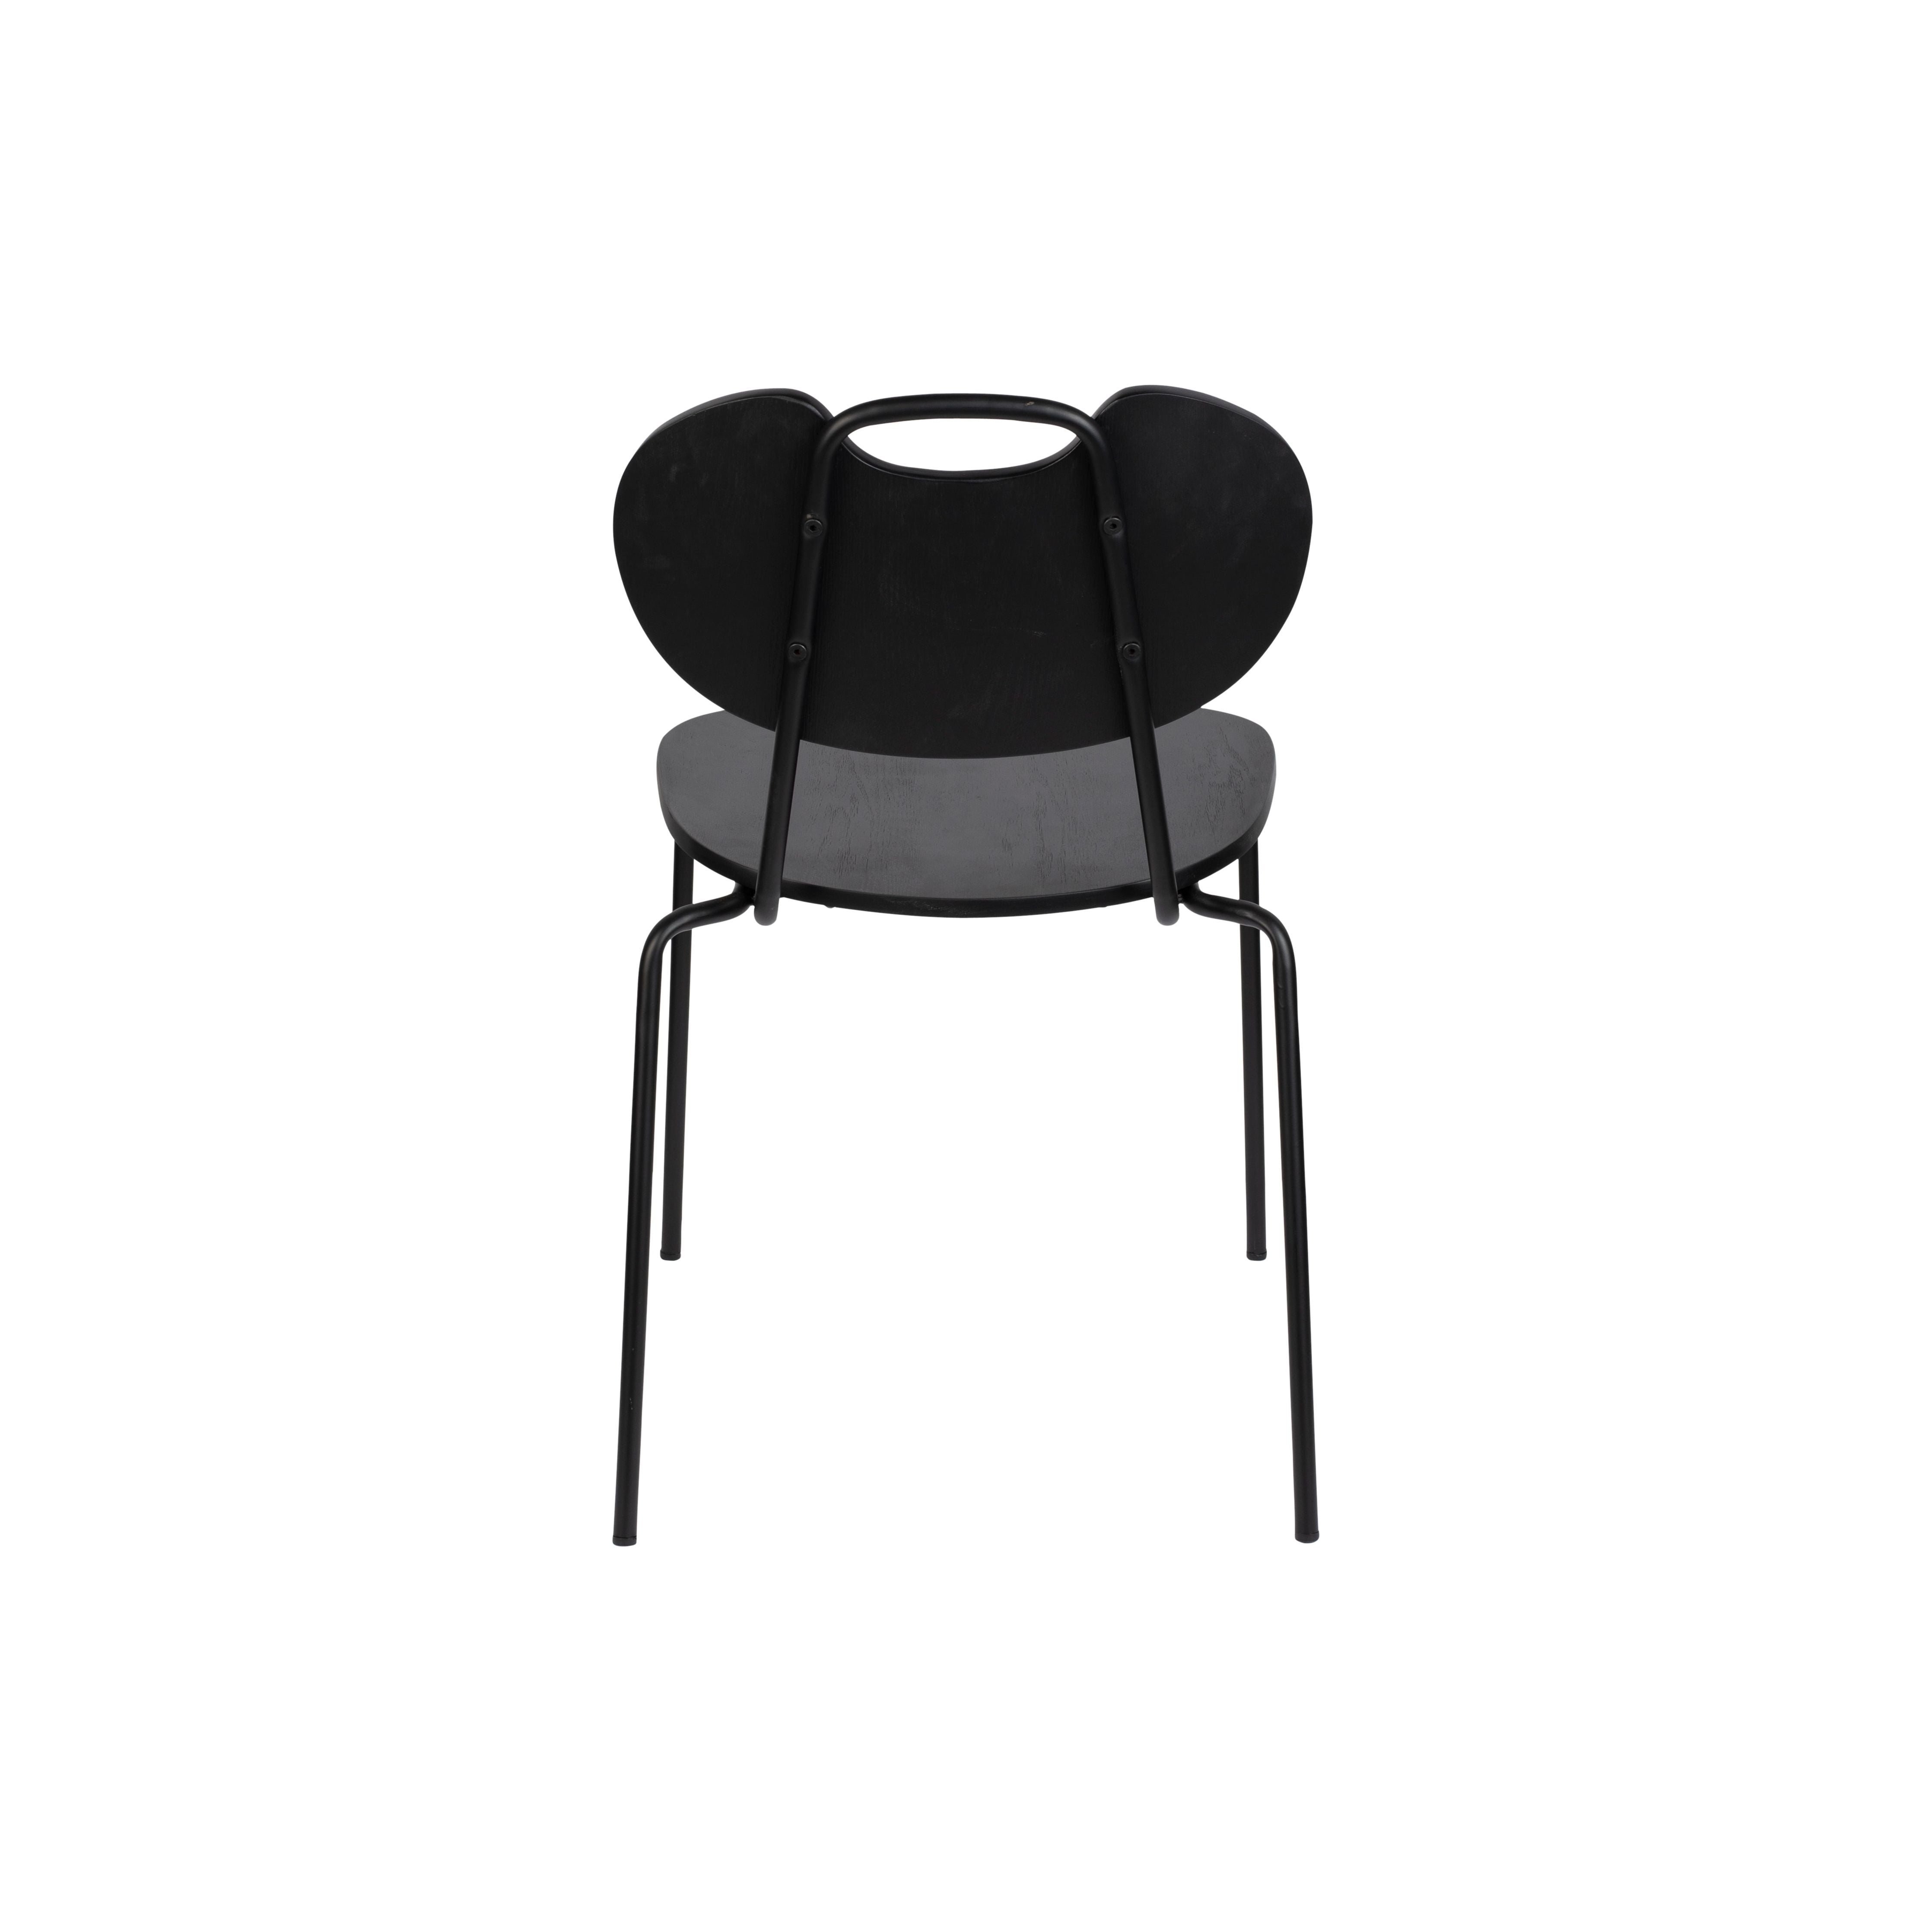 Chair aspen wood black